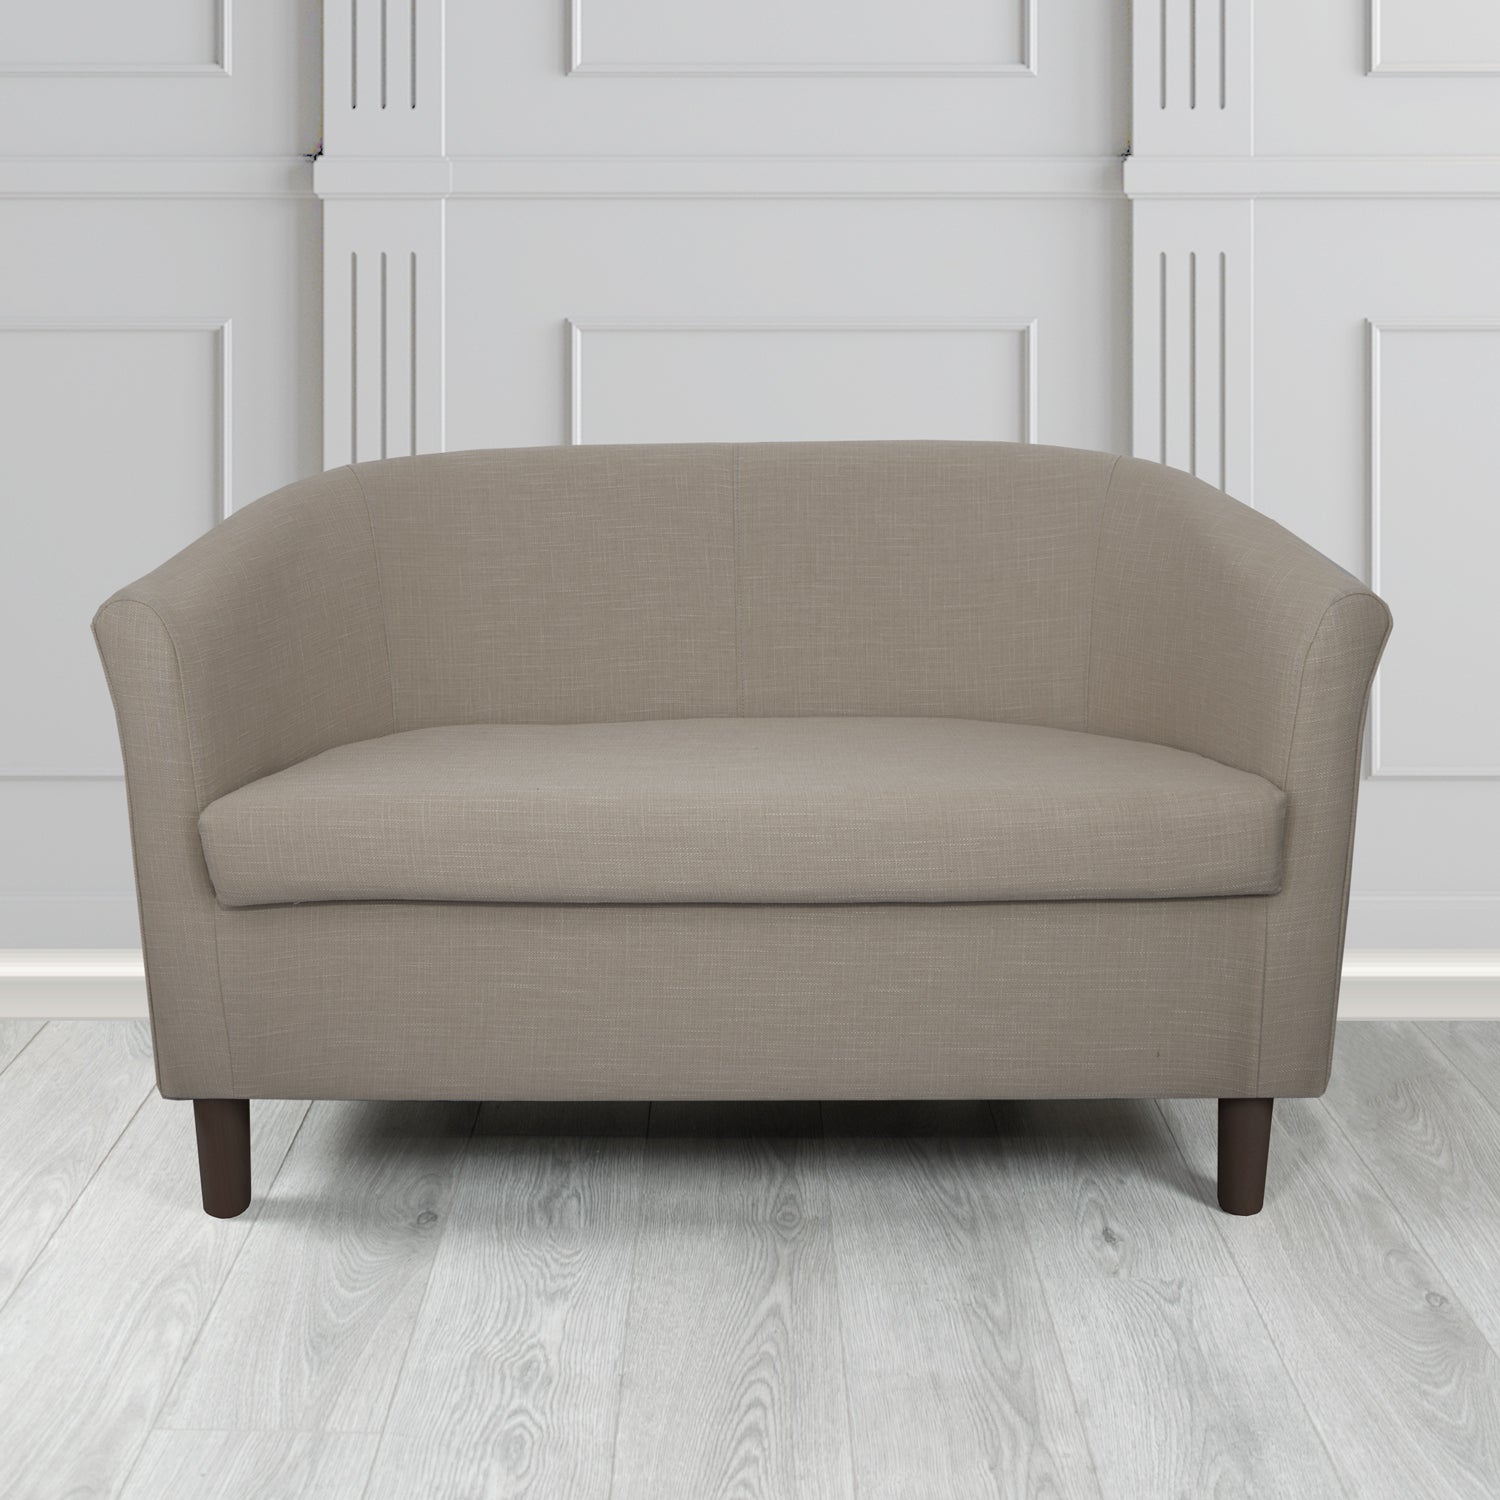 Tuscany 2 Seater Tub Sofa in Emporio Smokey Grey Linen Crib 5 Fabric - The Tub Chair Shop